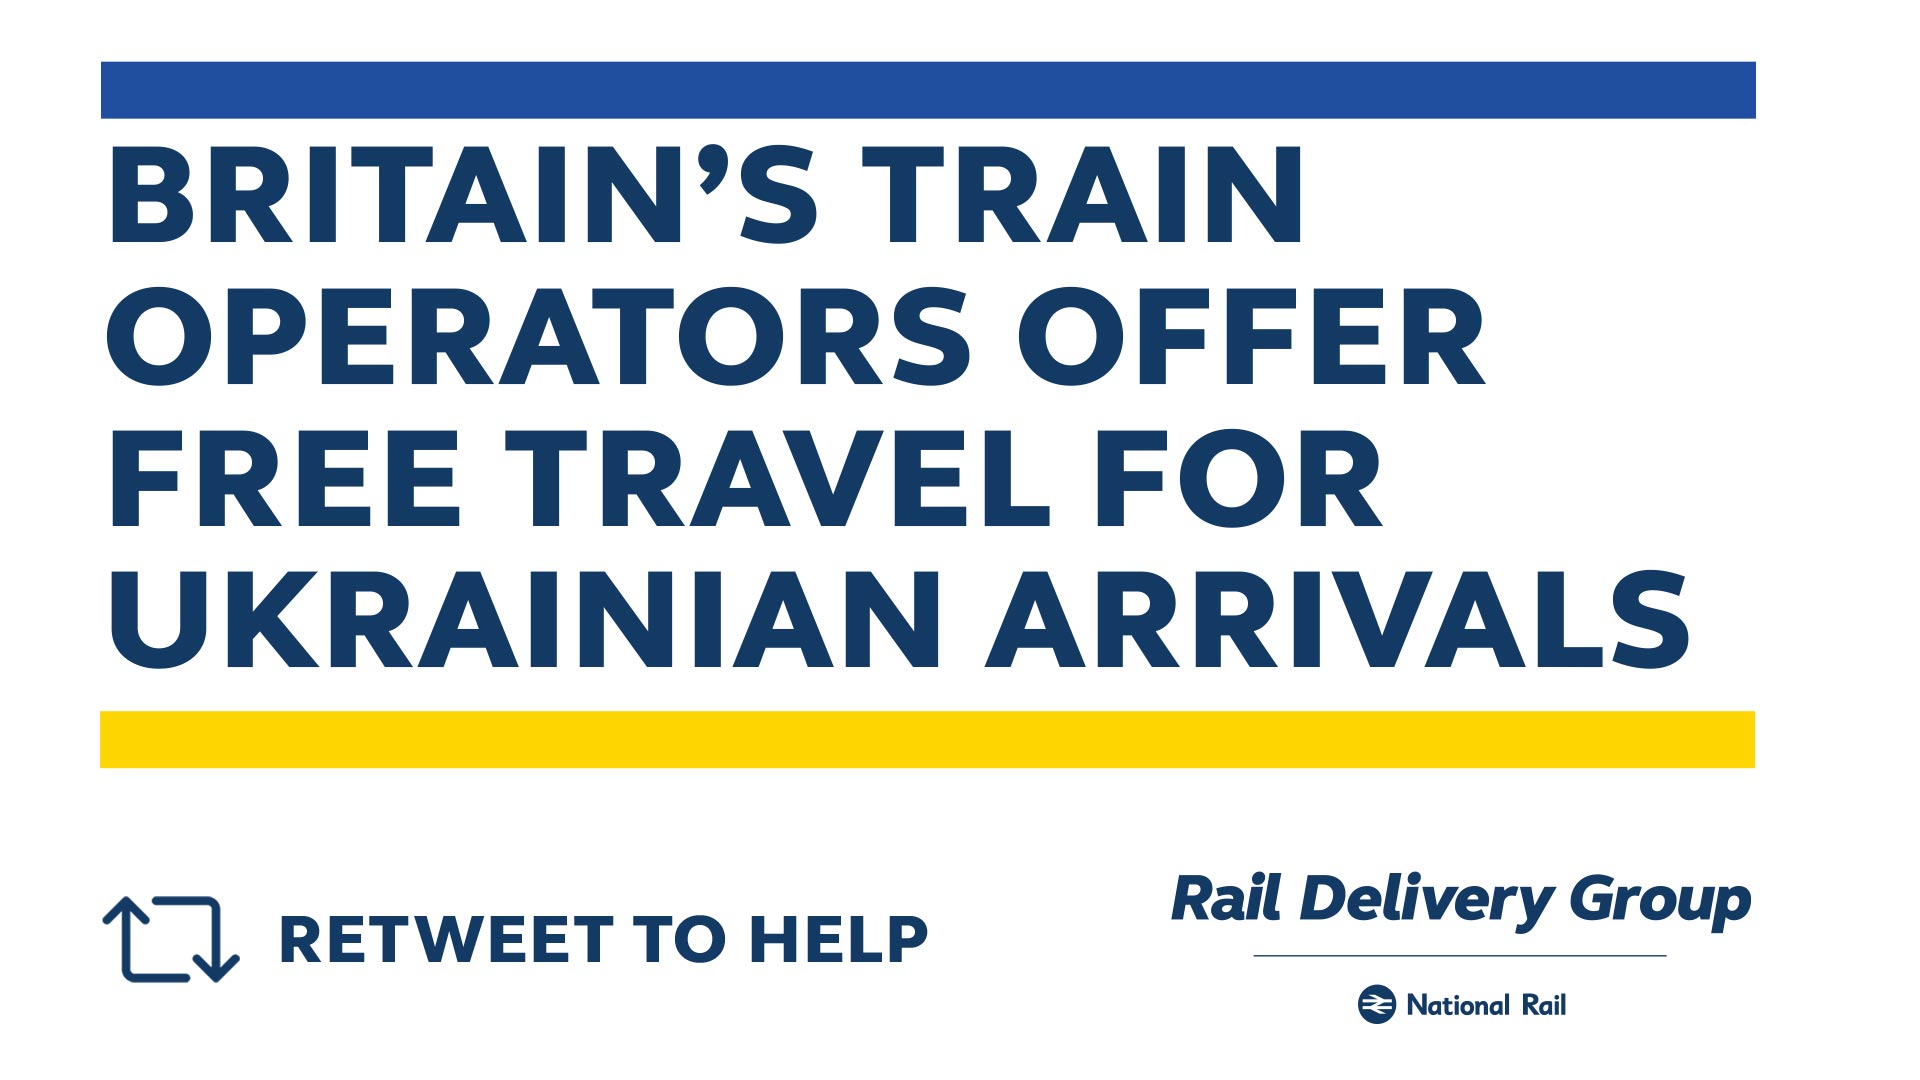 Britain's Train Operators offer free train travel for Ukrainian arrivals